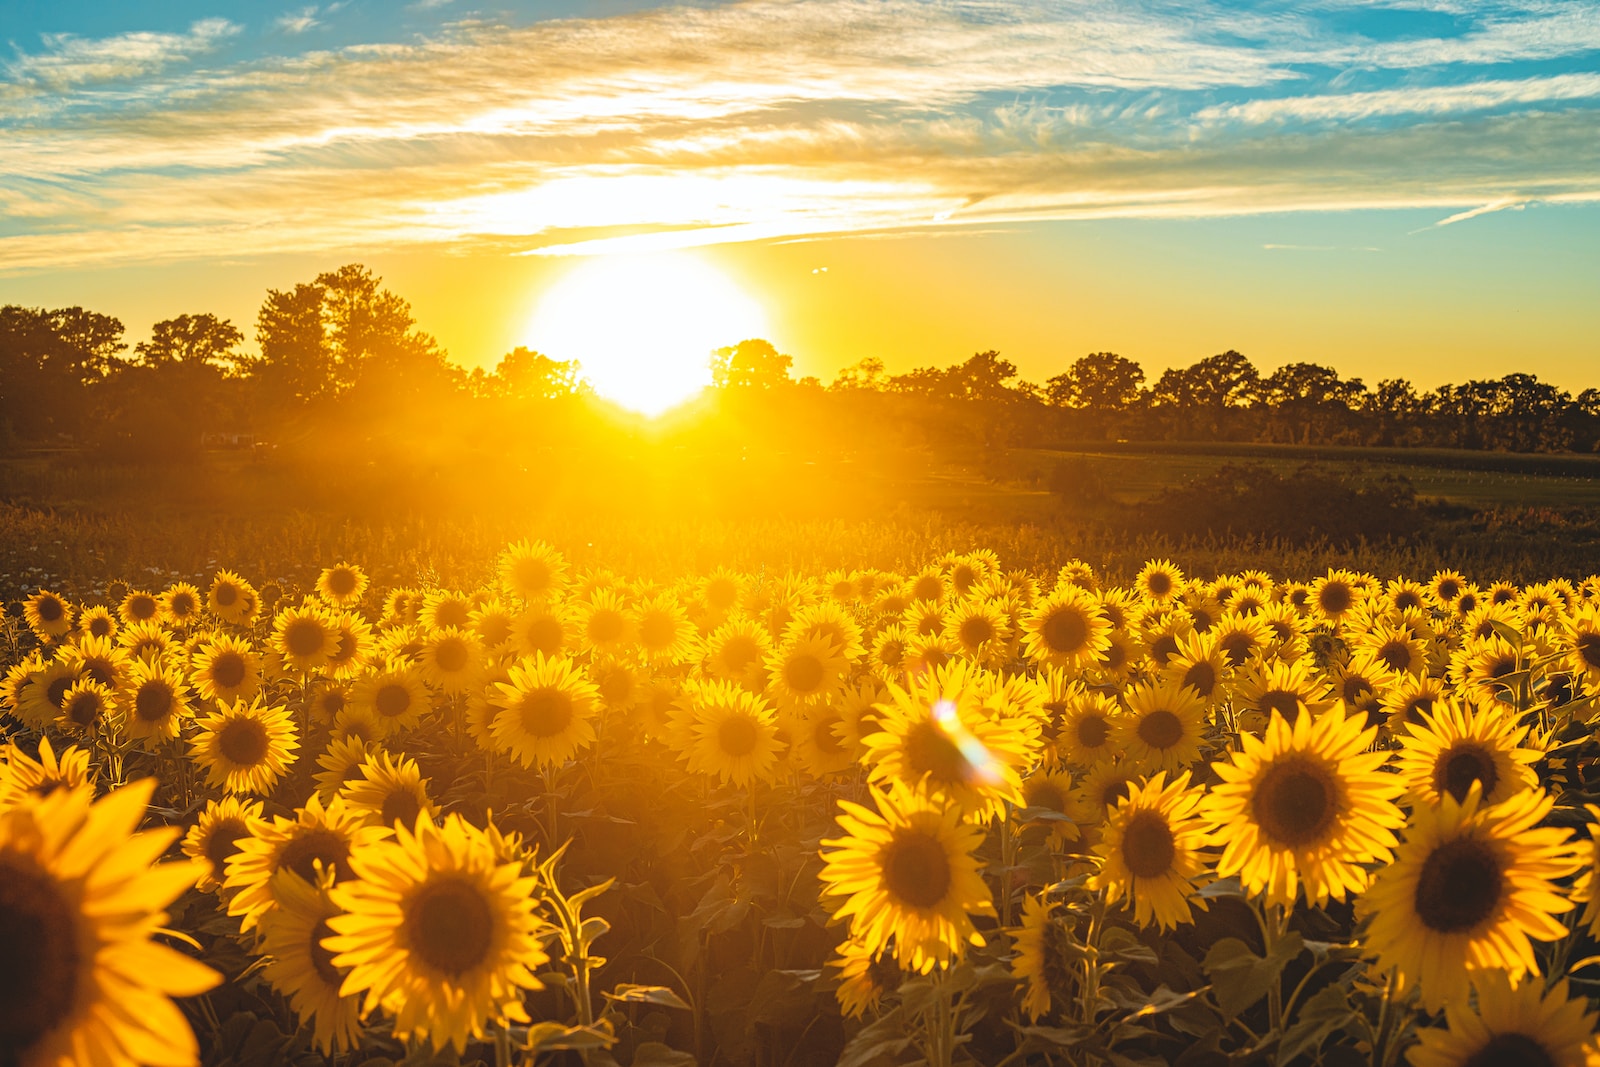 sunflower field under blue sky during sunset